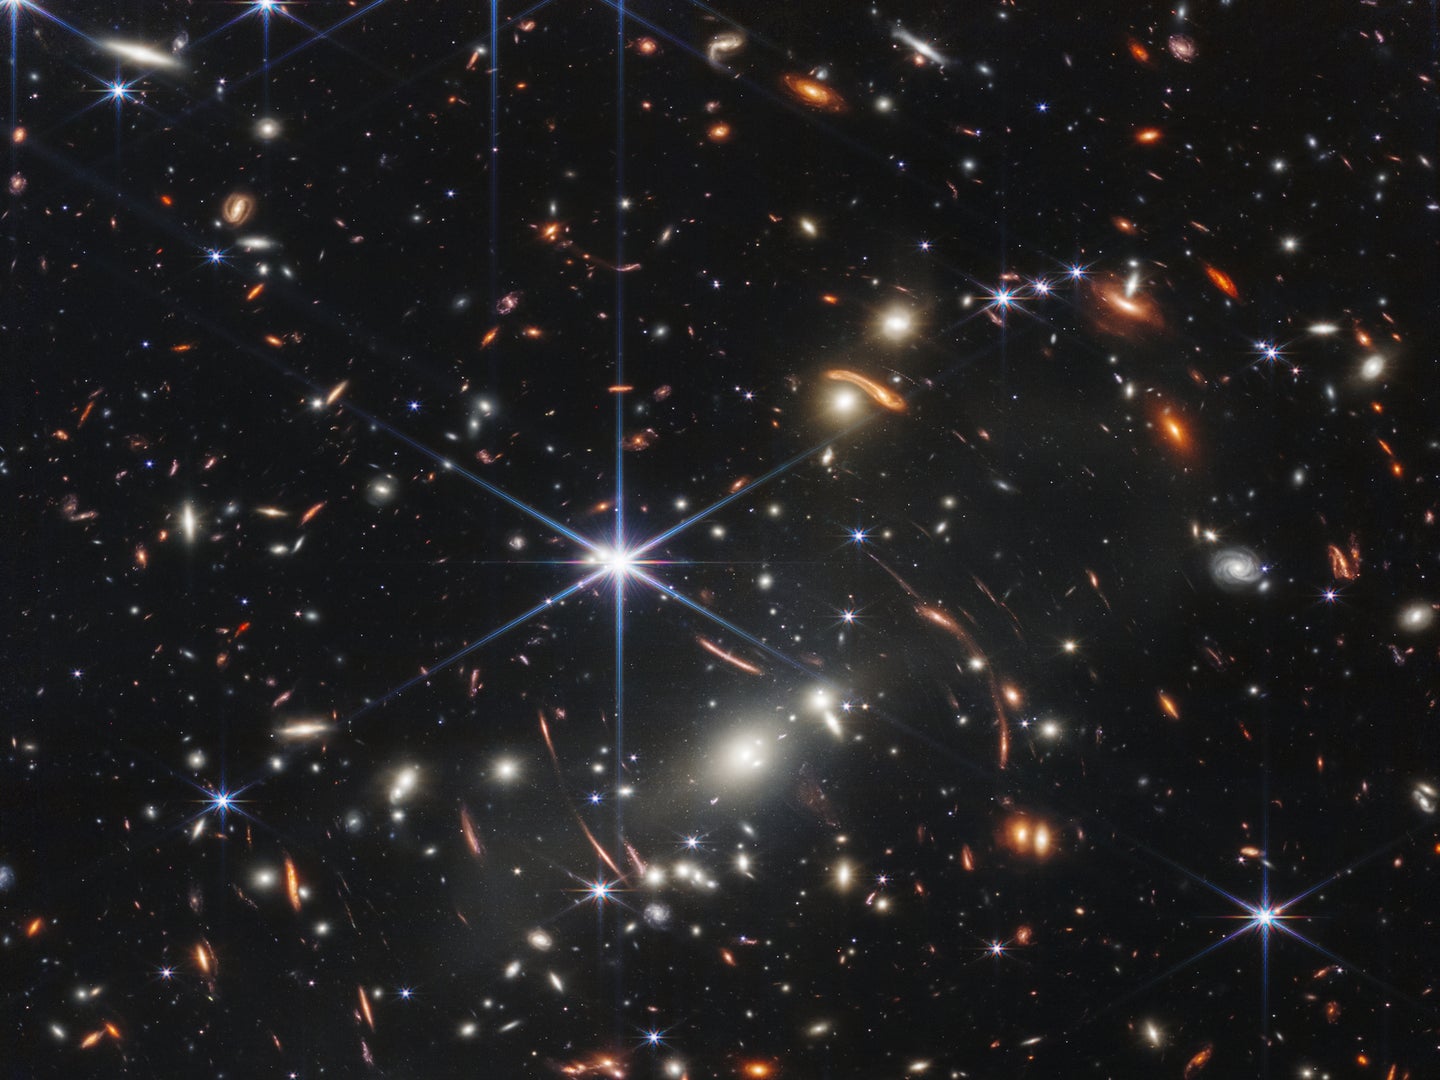 Photo of galaxies in space taken by NASA's James Webb Telescope